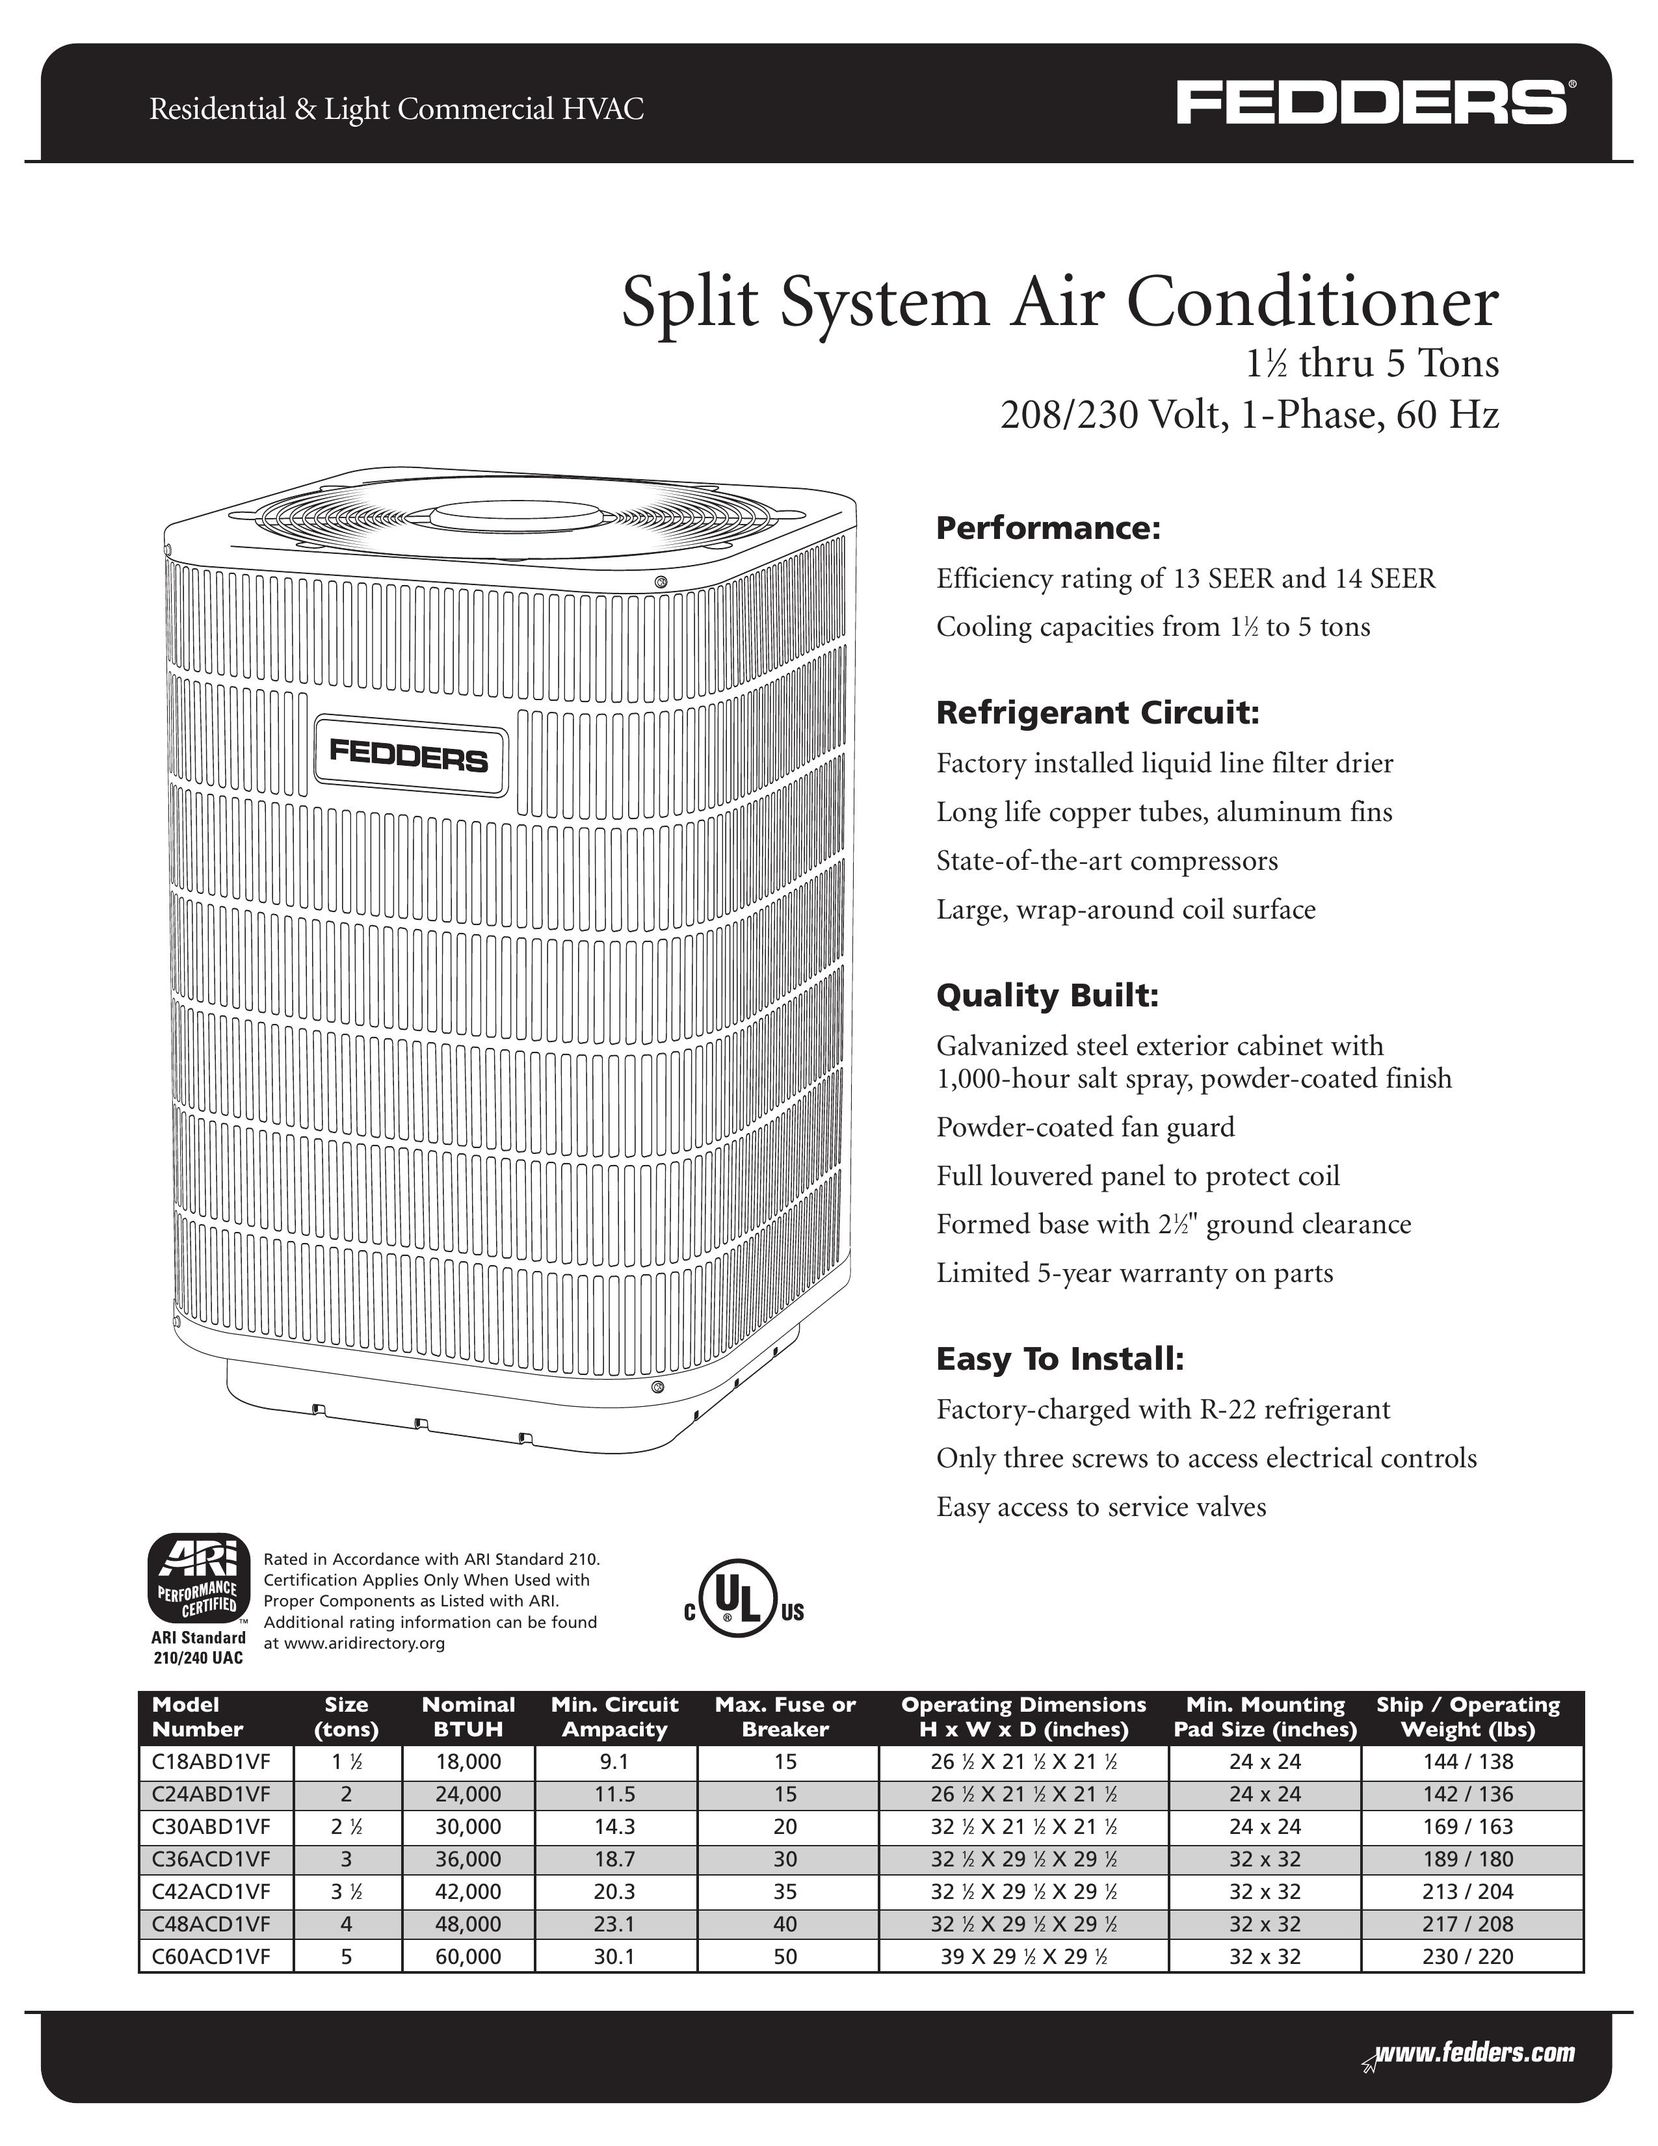 Fedders C24ABD1VF Air Conditioner User Manual